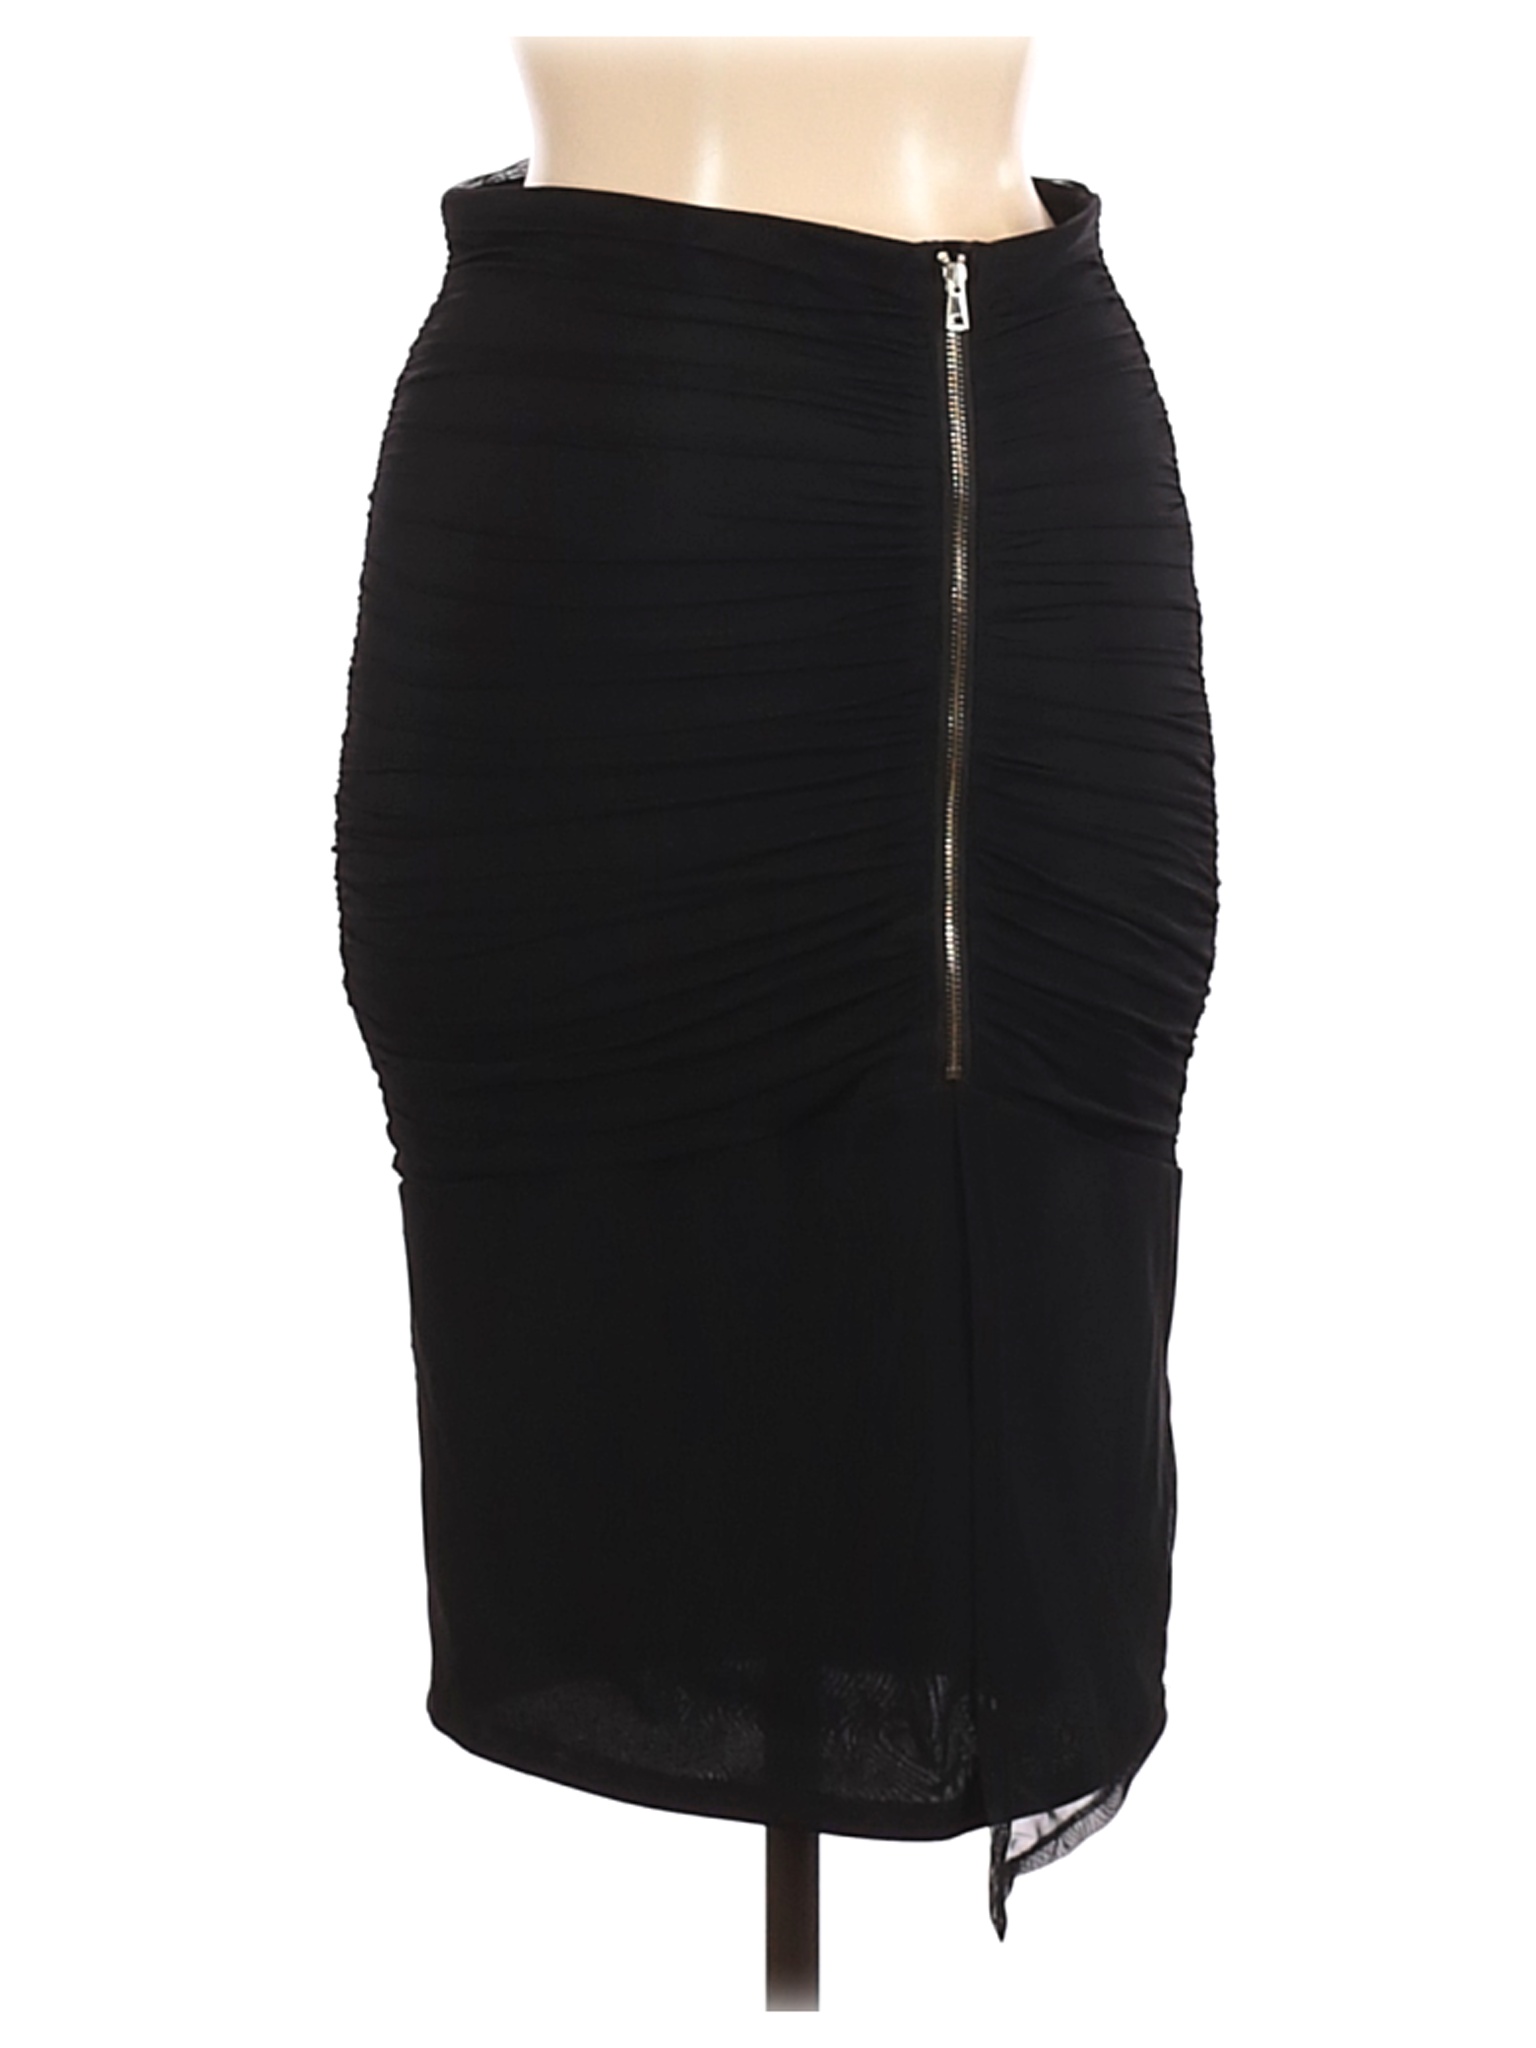 NWT Bebe Women Black Casual Skirt M | eBay